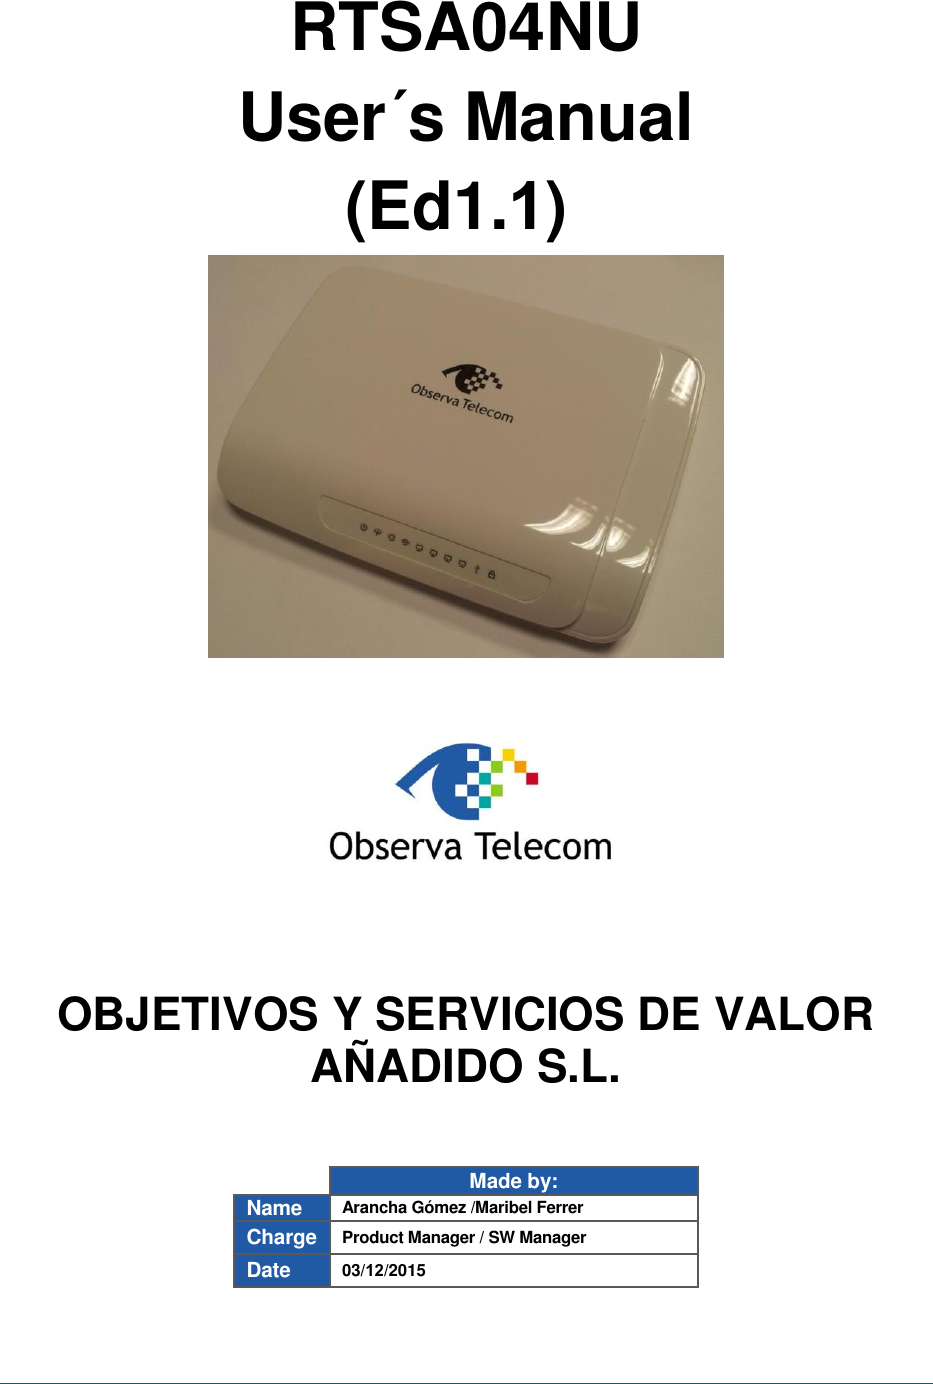 RTSA04NU User´s Manual  (Ed1.1) OBJETIVOS Y SERVICIOS DE VALOR AÑADIDO S.L. Made by: Name  Arancha Gómez /Maribel Ferrer Charge  Product Manager / SW Manager Date  03/12/2015 